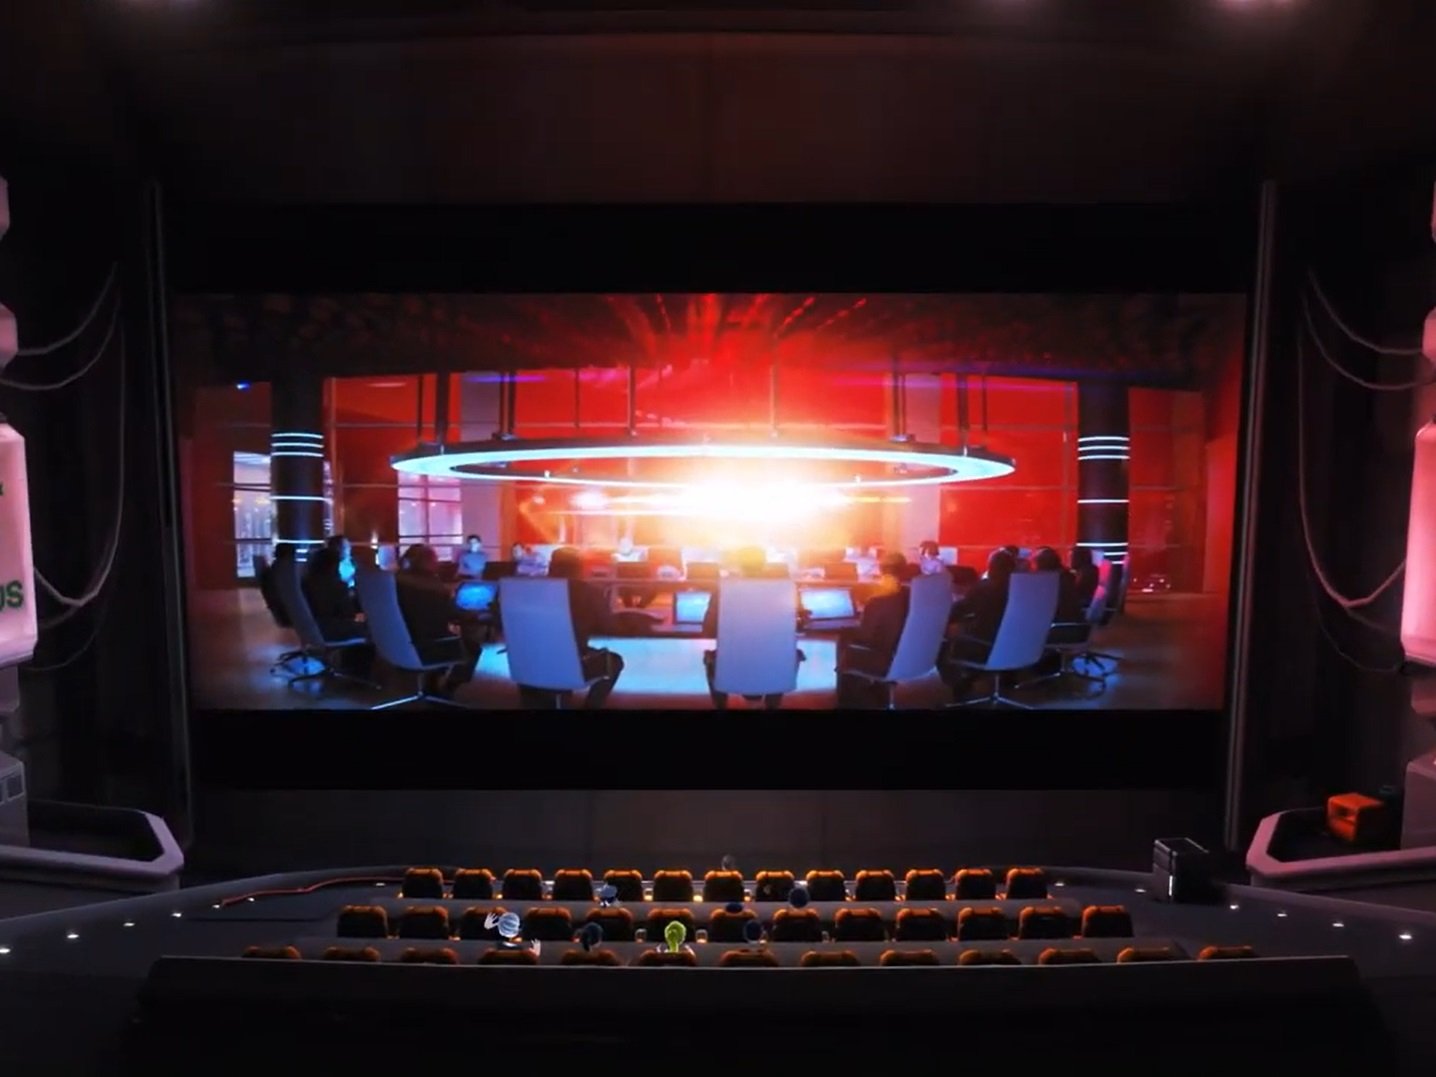 Bigscreen Cinema VR theater